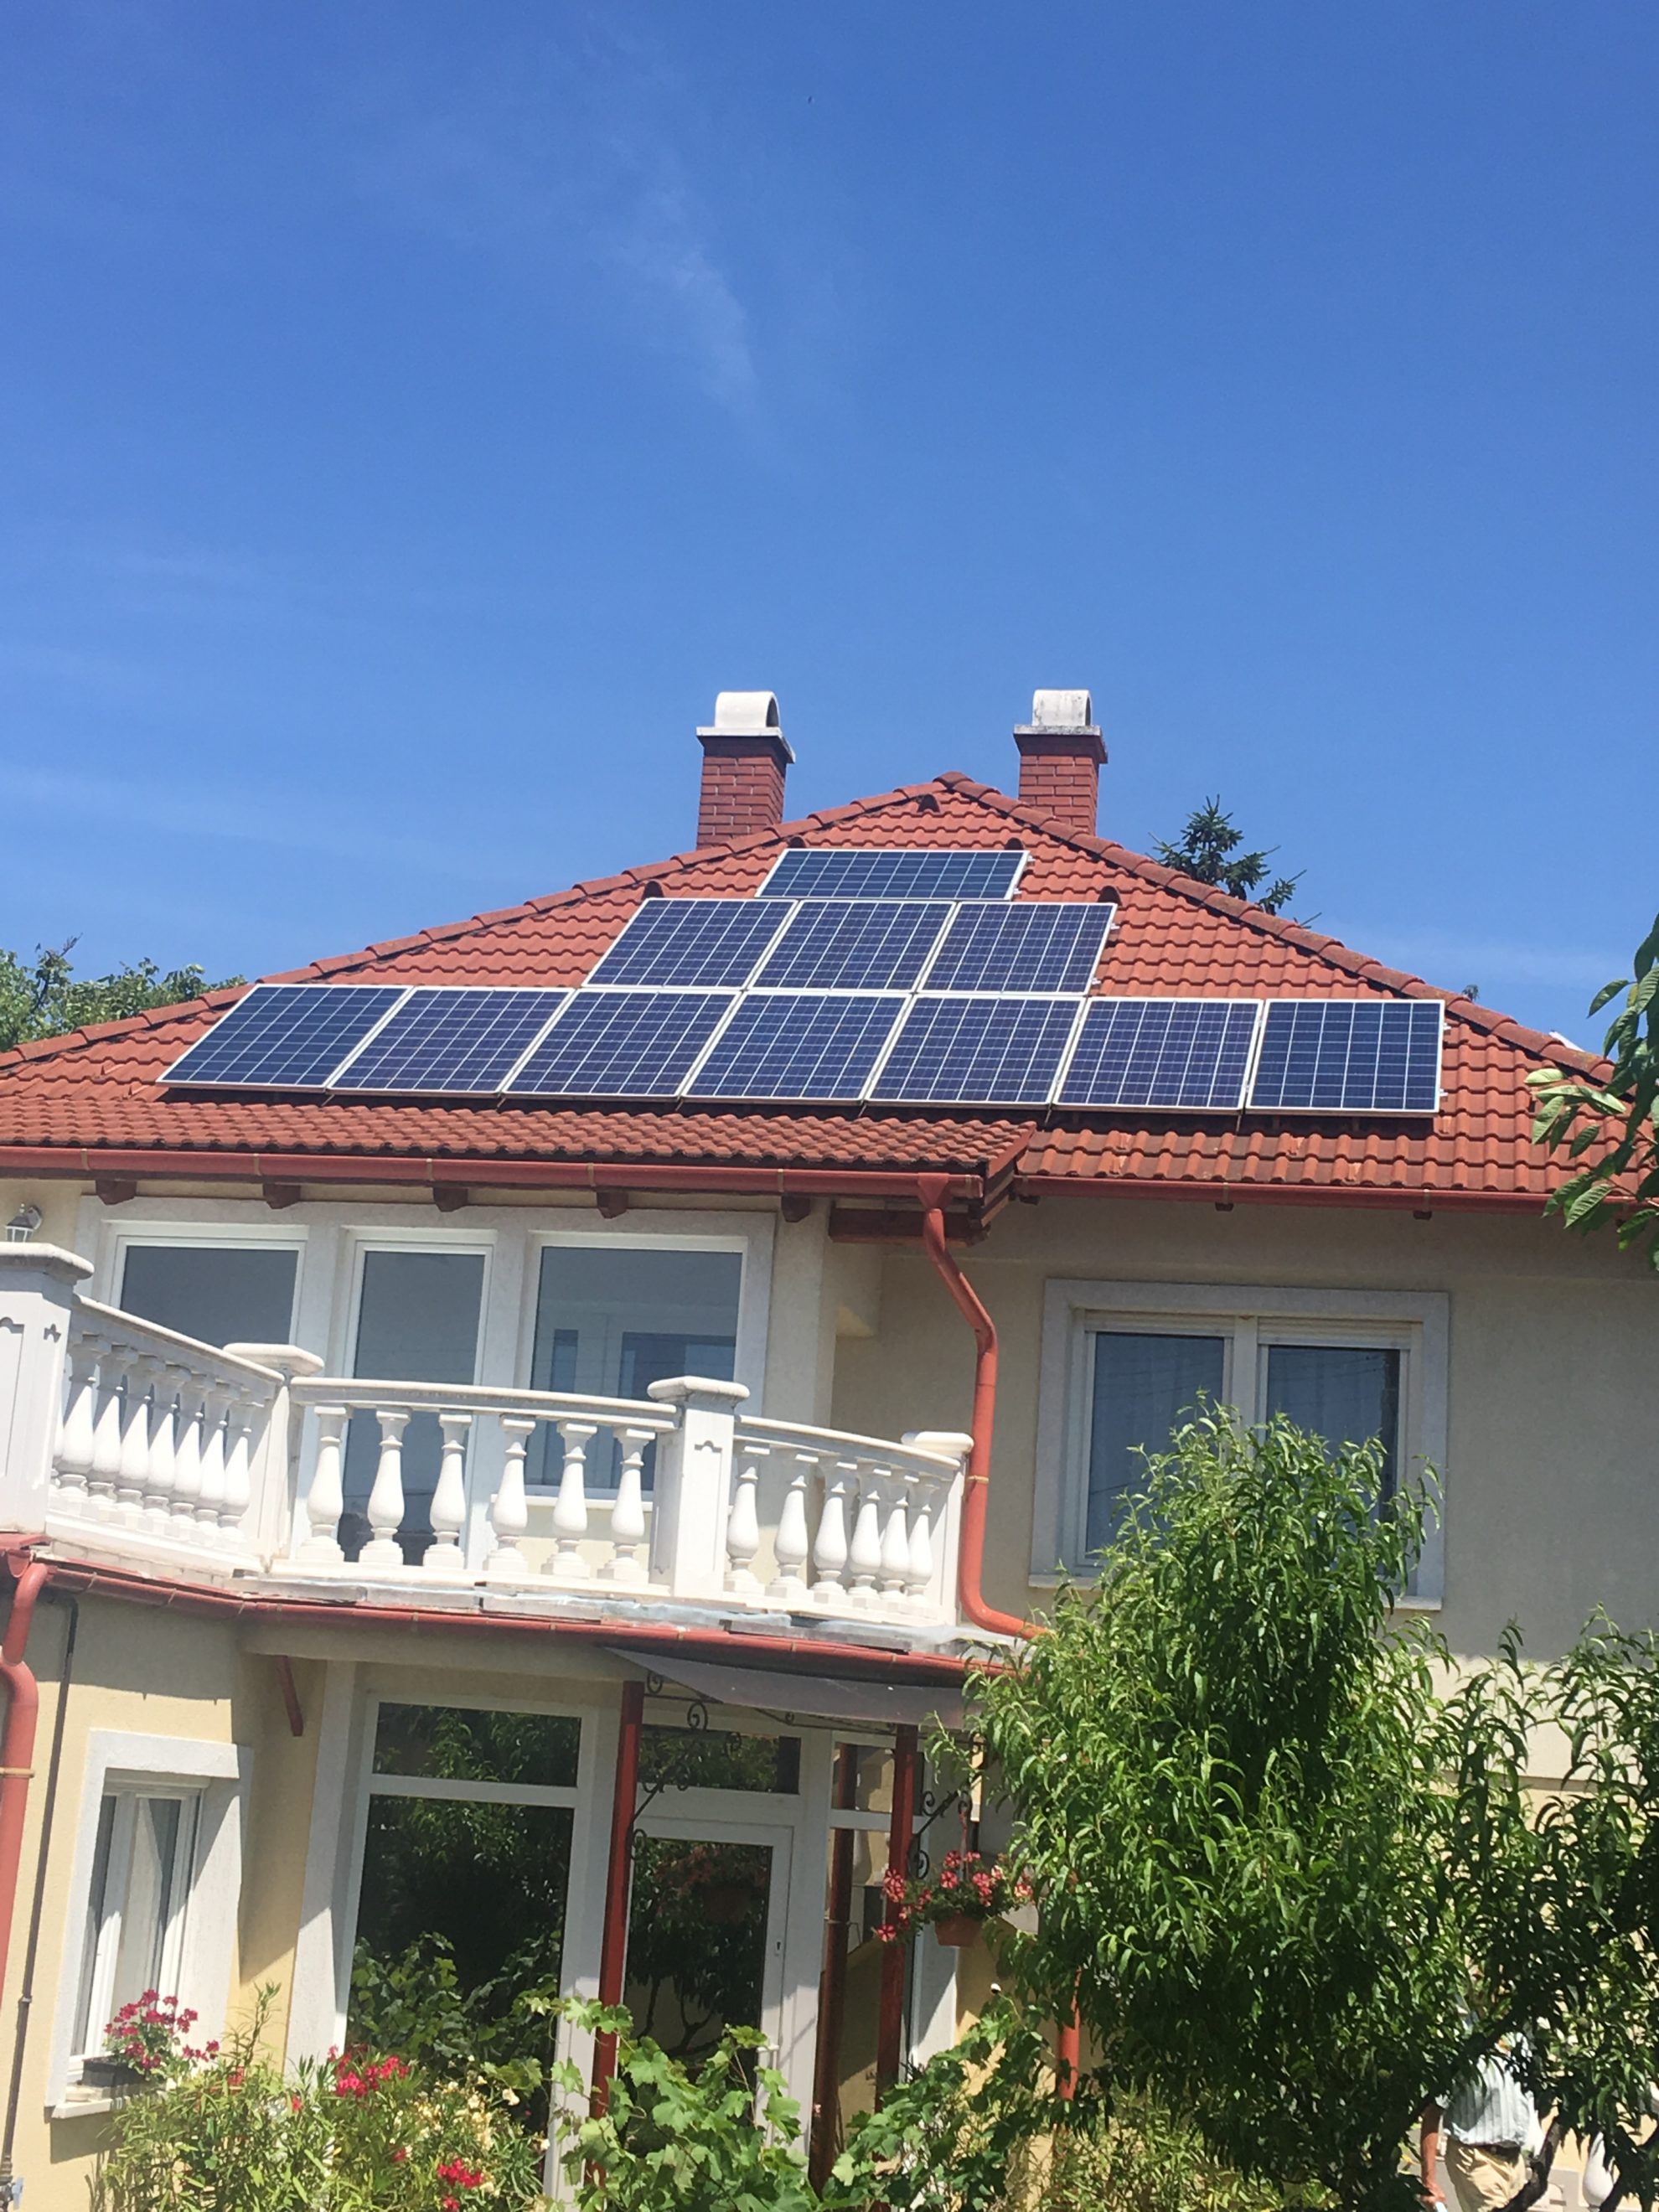 Veszprém 2016 - SolarWorld, 6 kWp